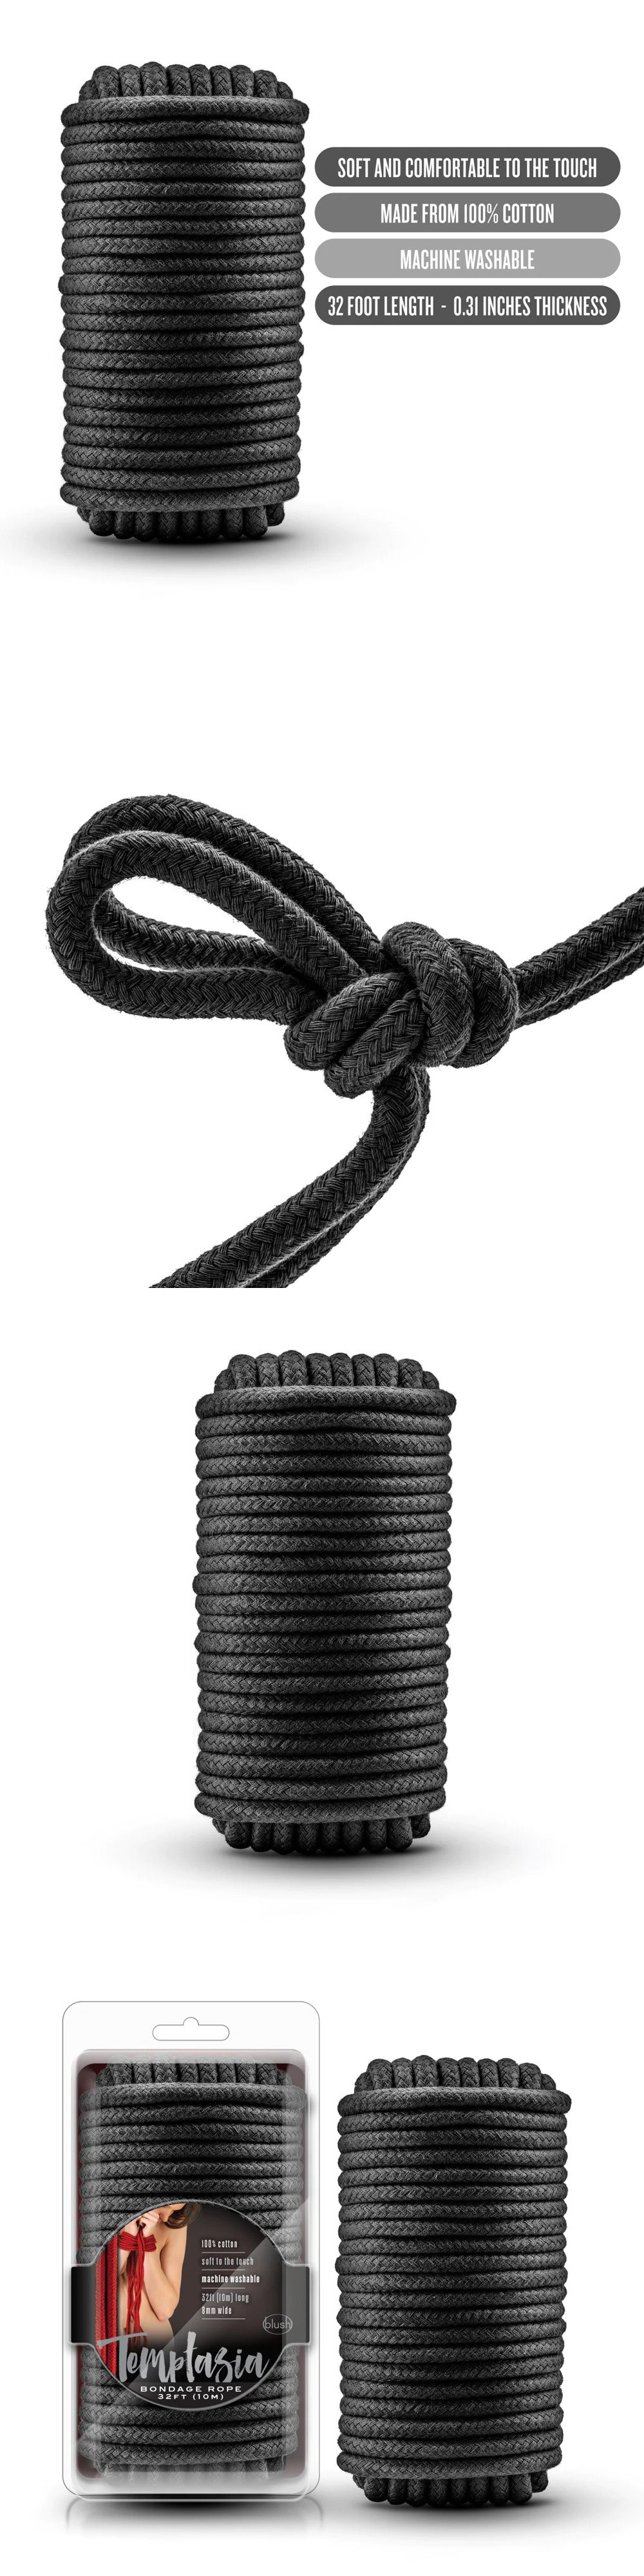 Blush Temptasia Bondage Black Rope 32 Feet